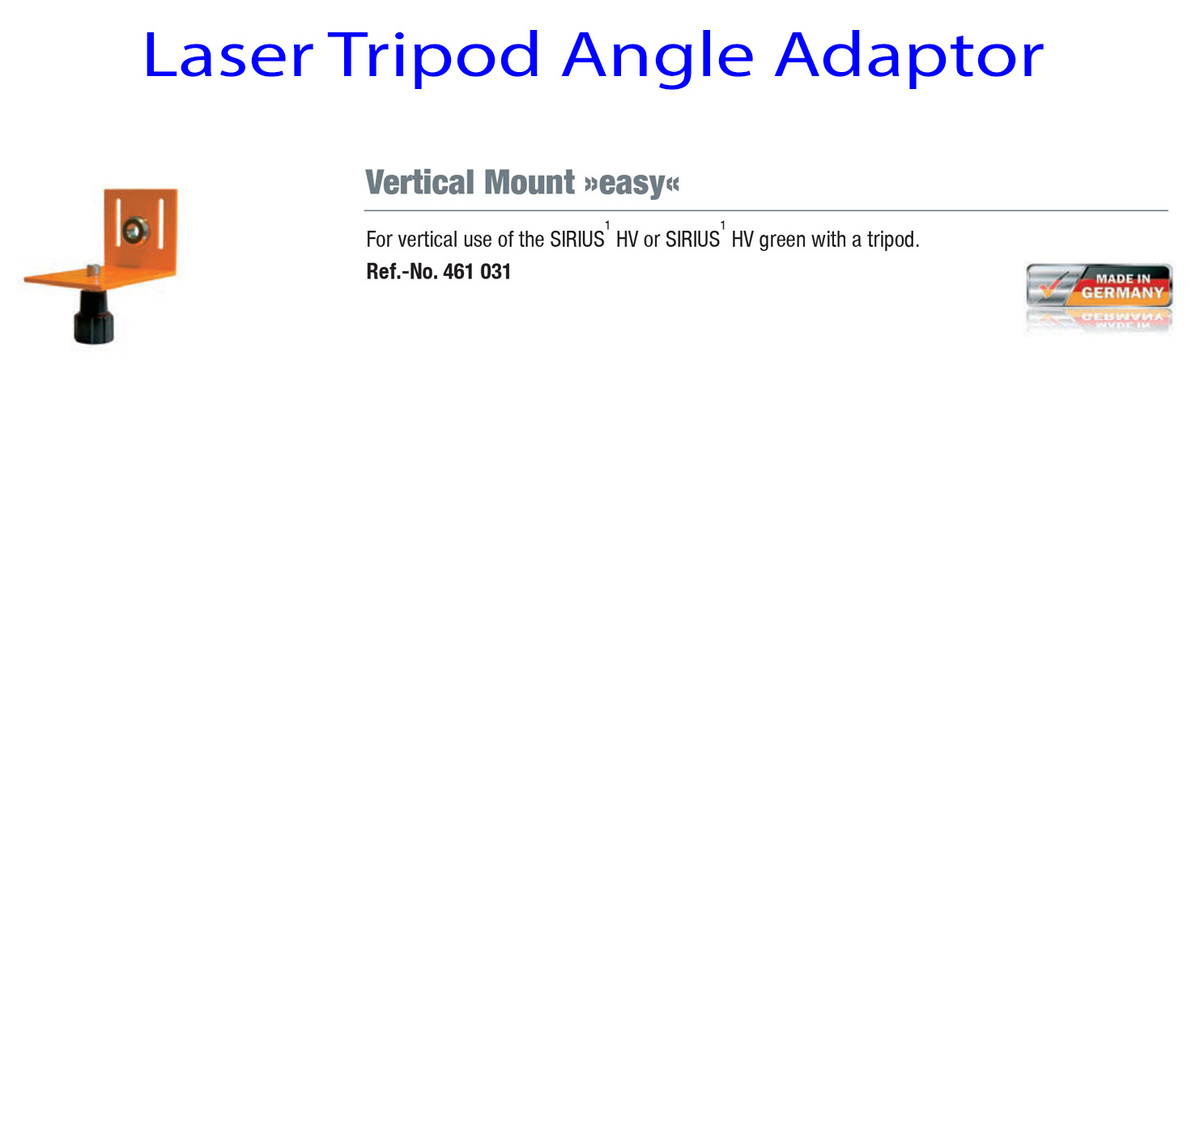 Laser-Tripod-Angle-Adaptor-text.jpg#asse